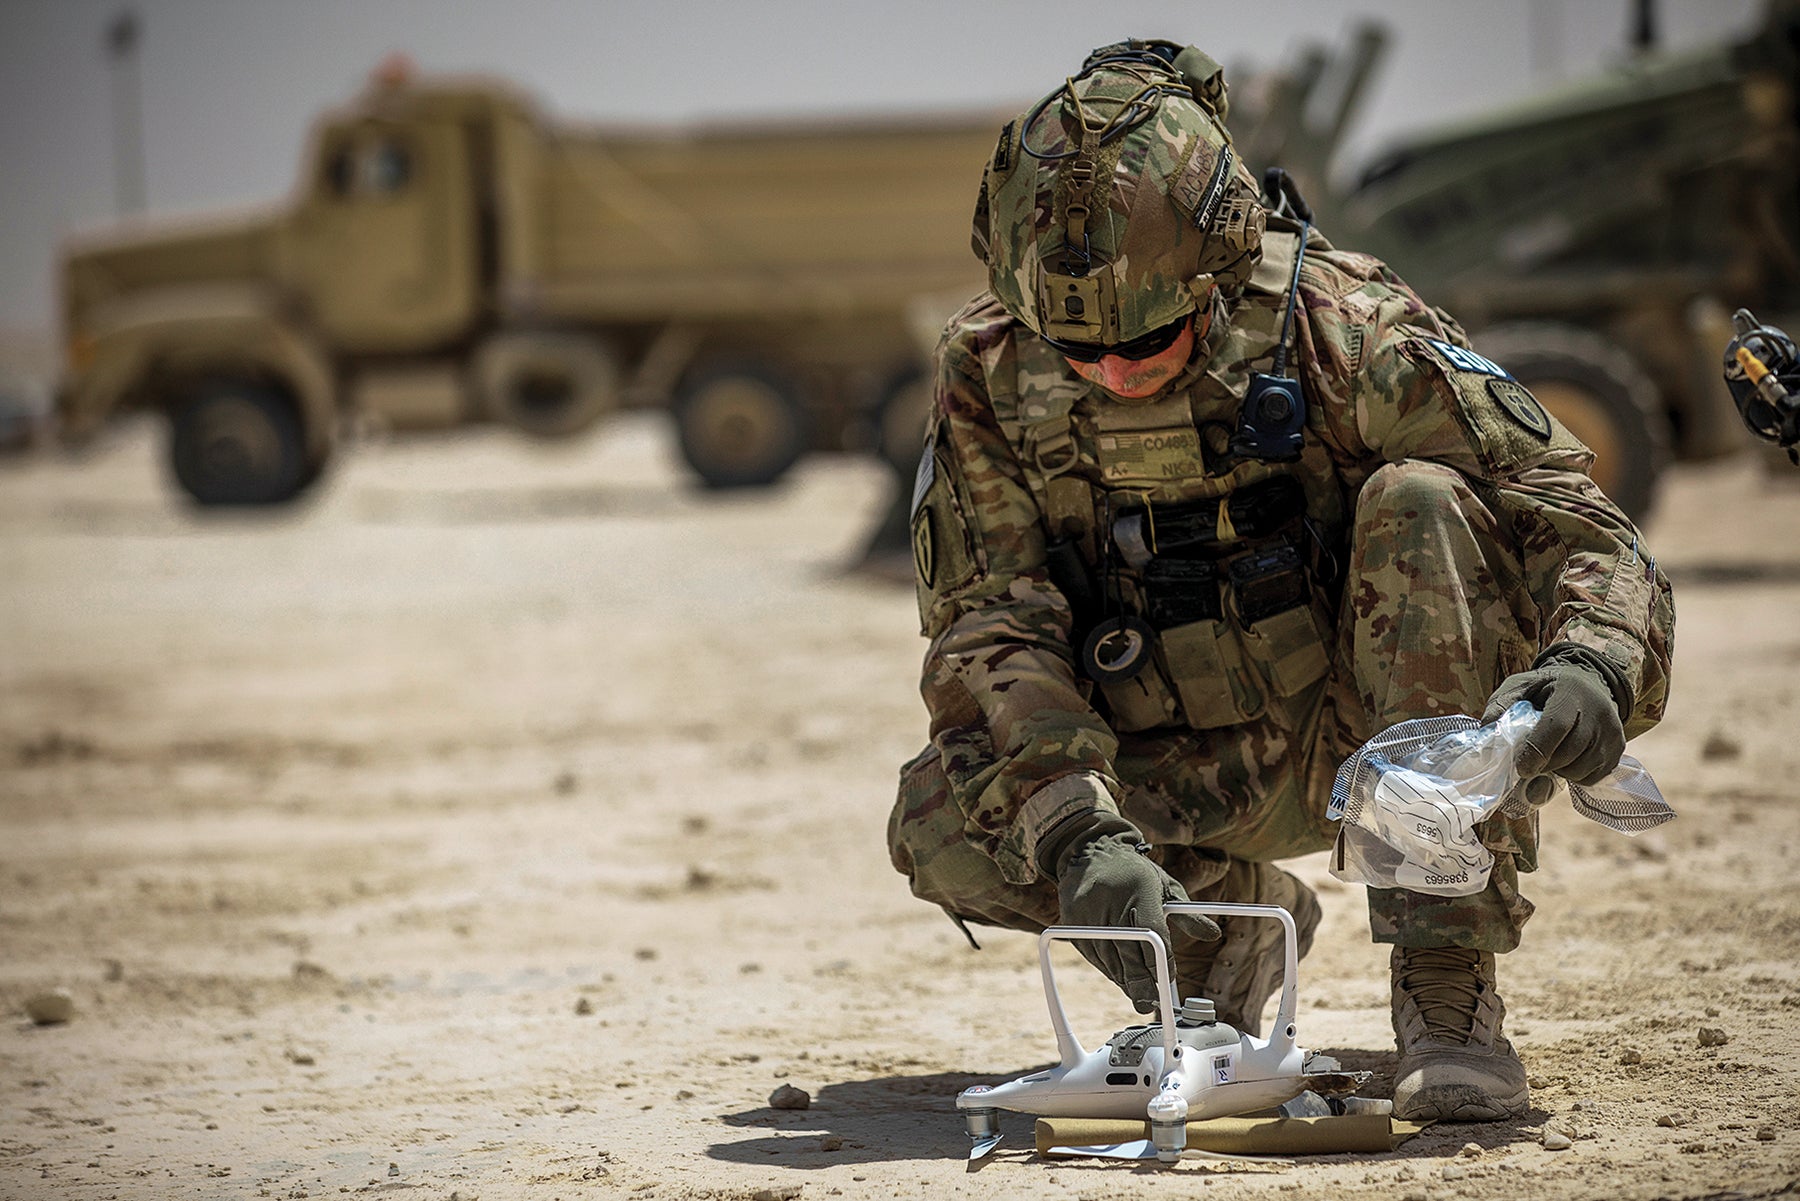 Sgt. 1st Class Adrian Coghill, an explosive ordnance disposal technician, sets up a remote-controlled ordnance disposal drone at the Ain al-Asad air base, Iraq. (Credit: U.S. Army/Spc. Derek Mustard)